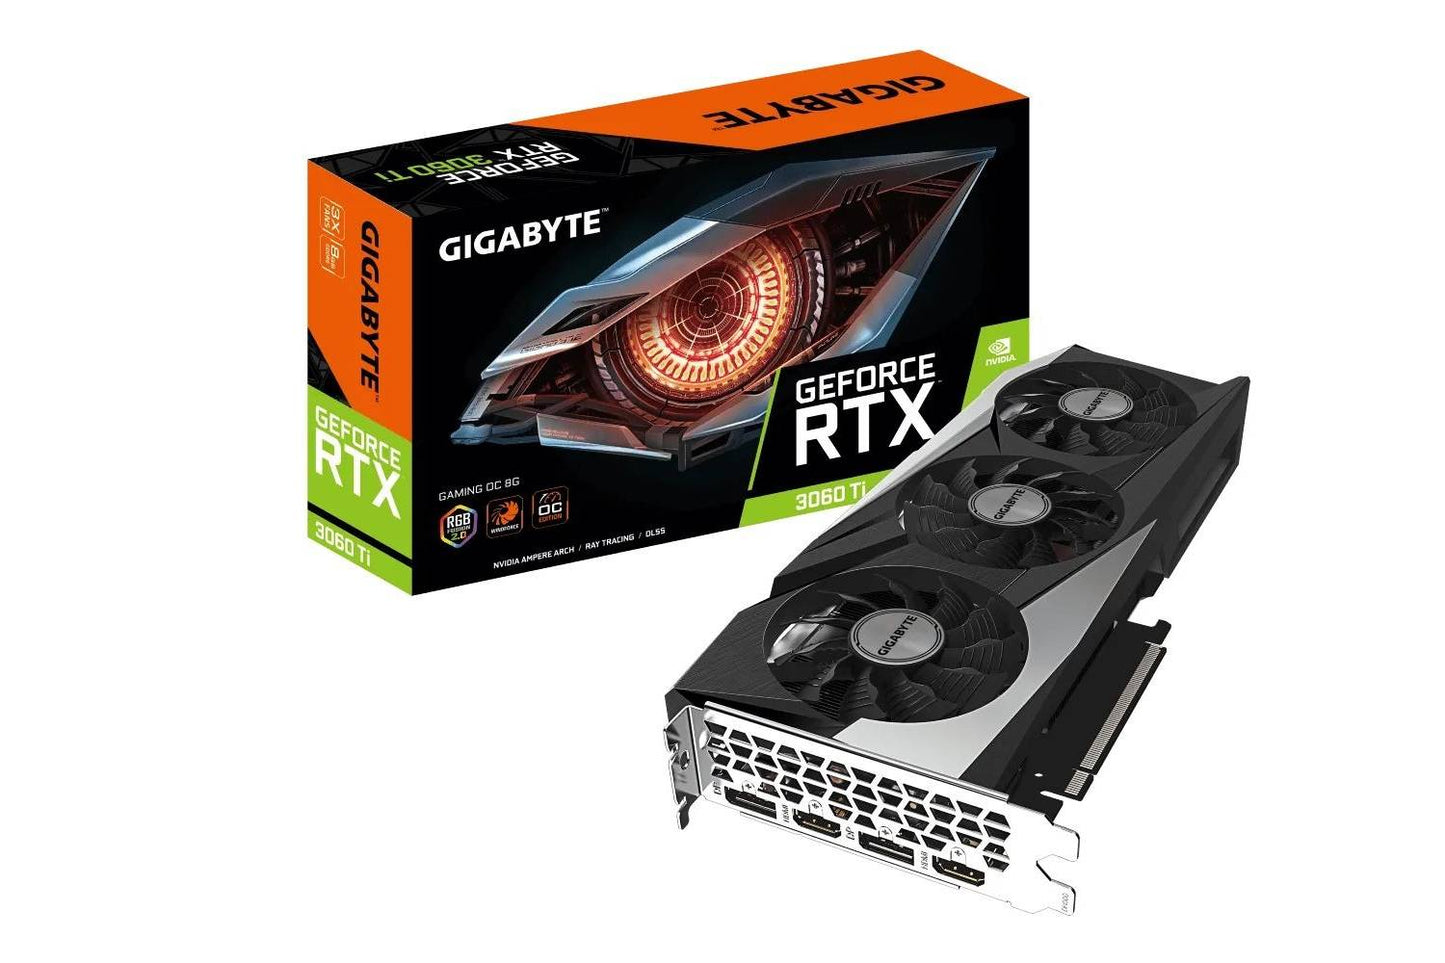 Gigabyte GeForce RTX 3060 Ti GAMING OC 8G  Graphics Card